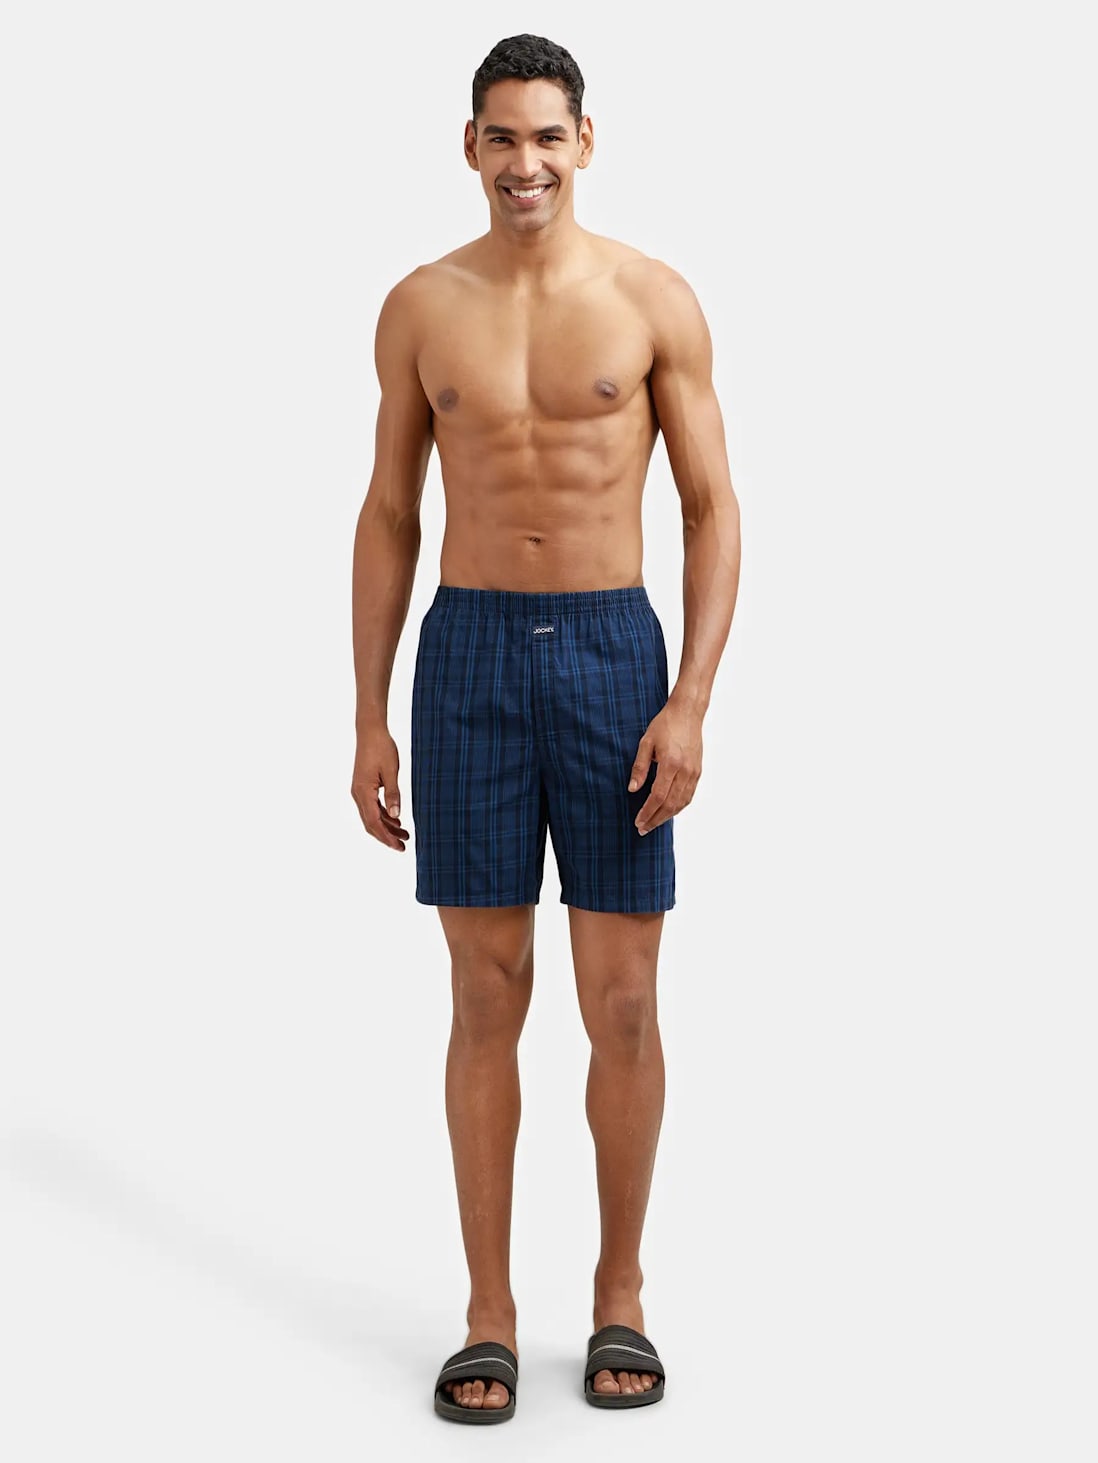 Buy Men's Super Combed Mercerized Cotton Woven Checkered Boxer Shorts ...